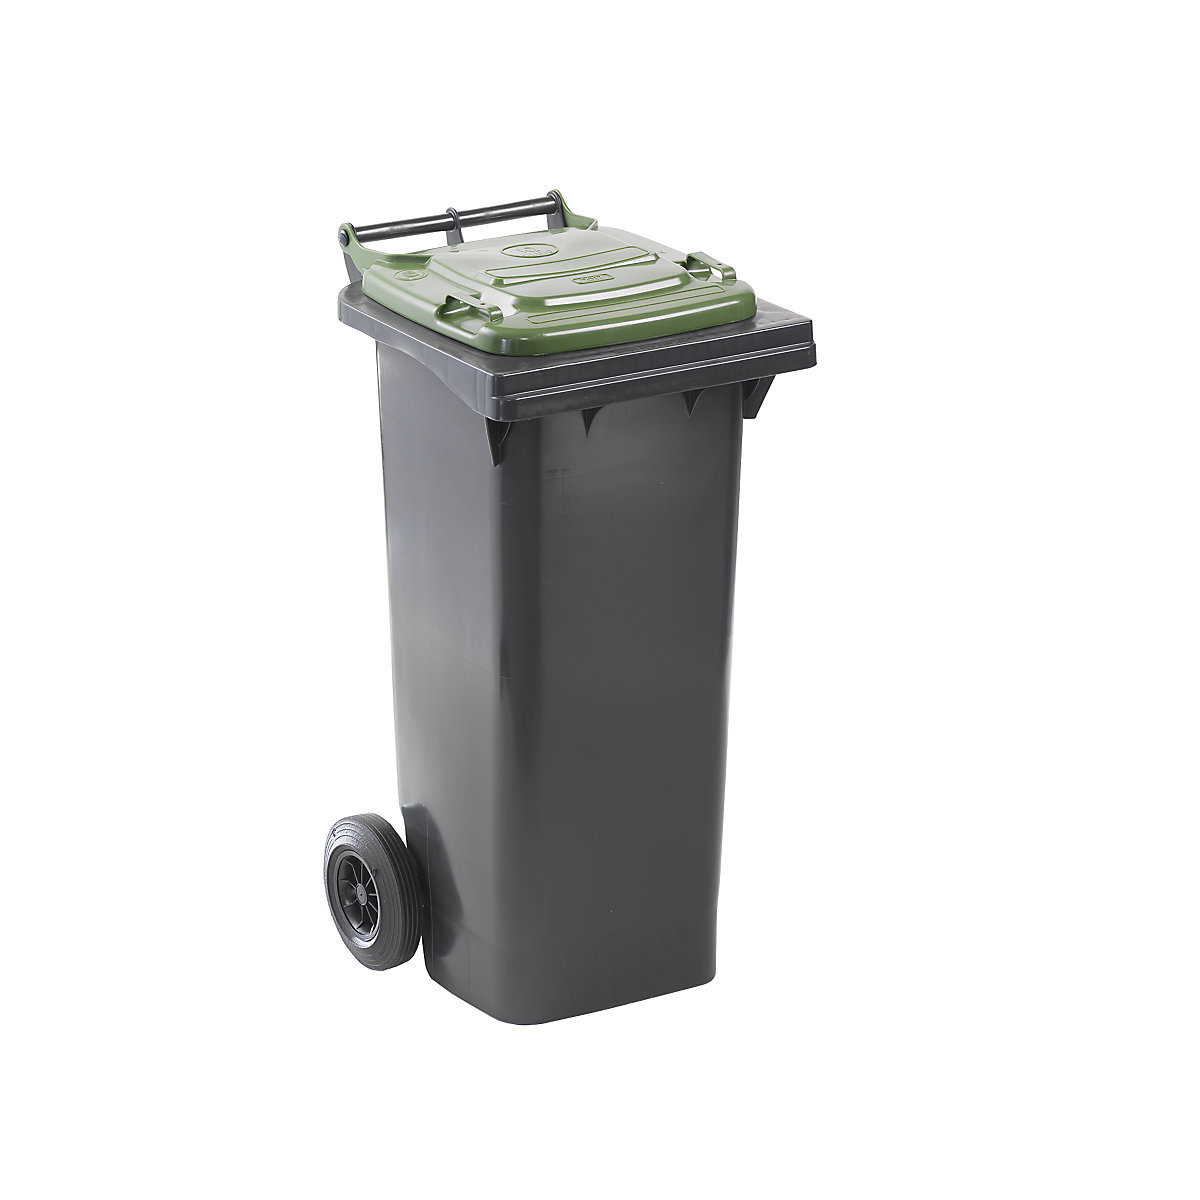 Contentor de lixo conforme a norma DIN EN 840, capacidade 80 l, LxAxP 448 x 975 x 530 mm, antracite, tampa verde